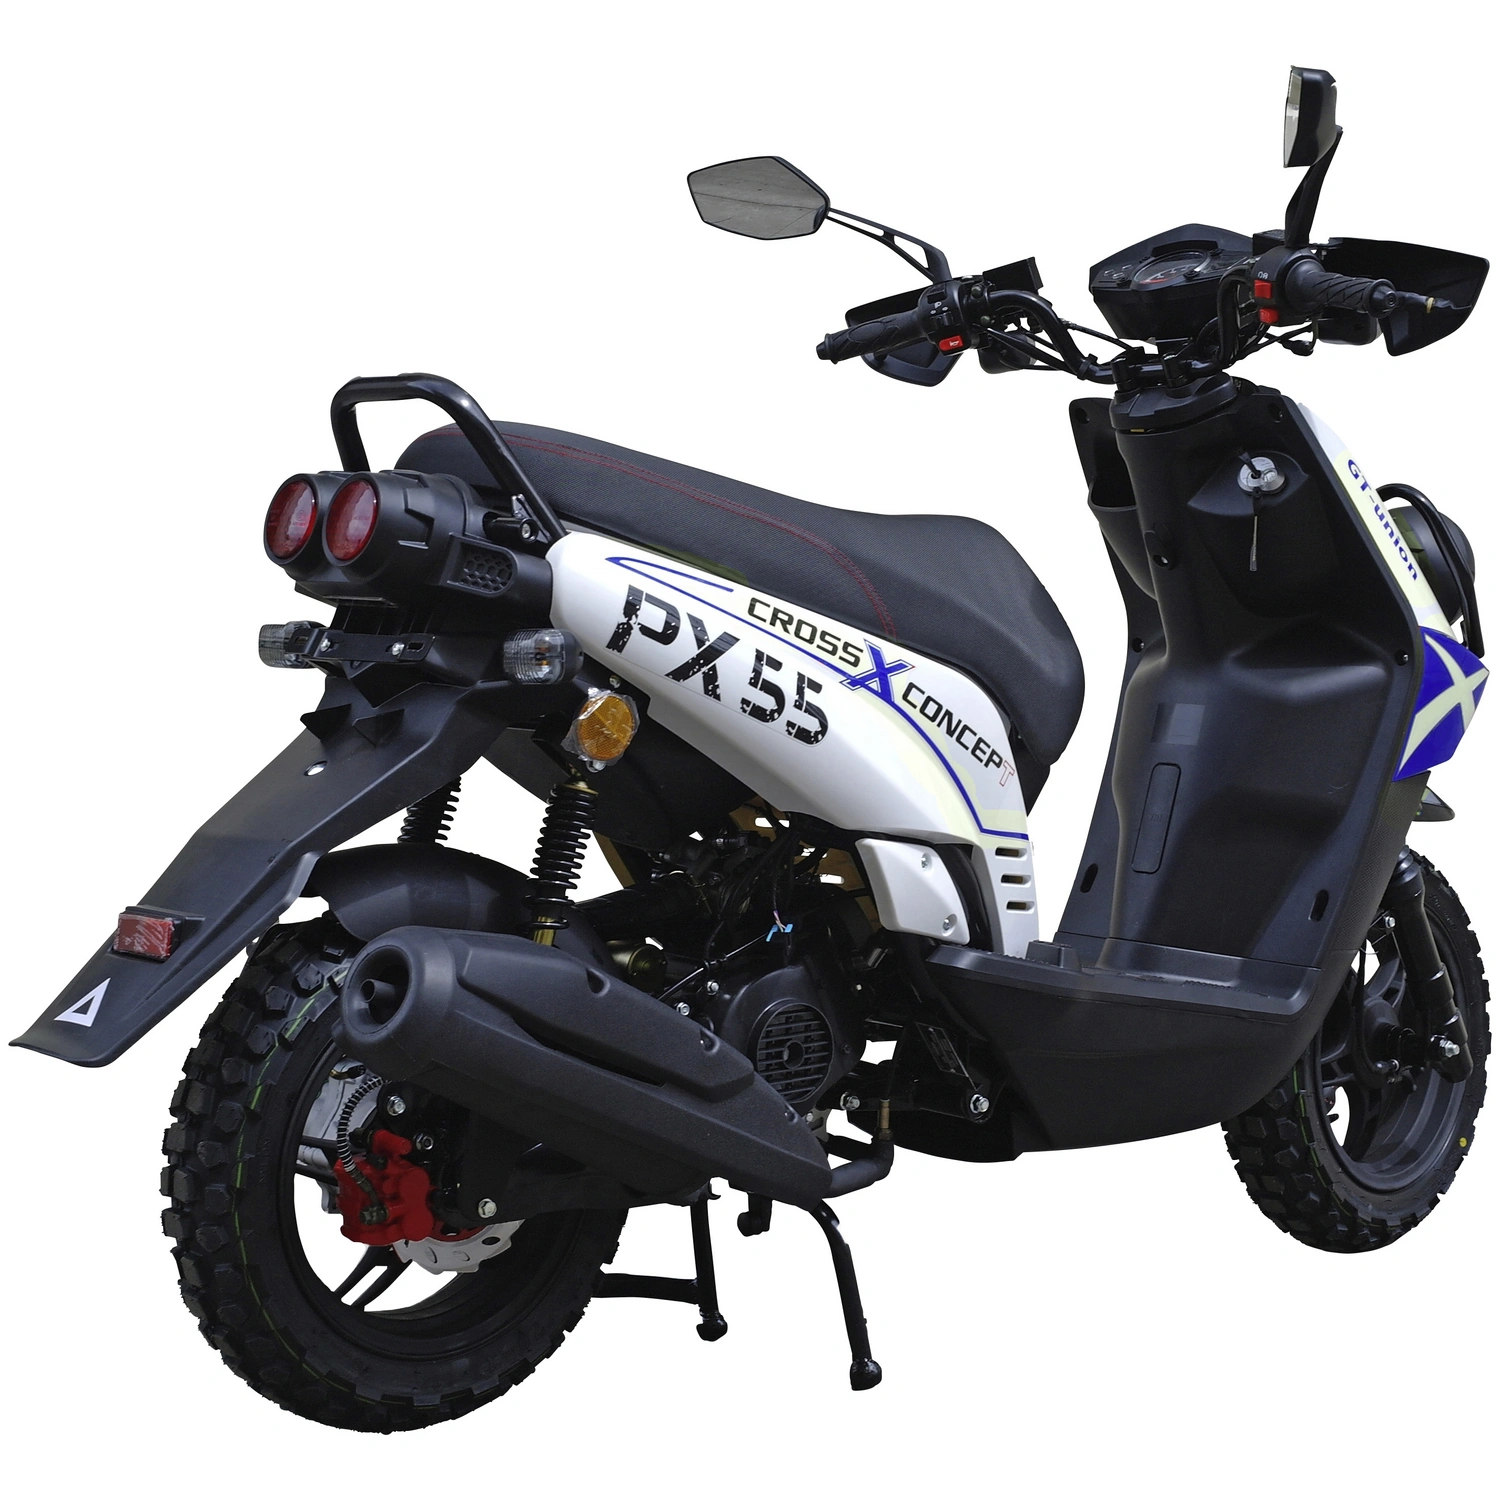 GT UNION Motorroller »PX 55 Cross-Concept«, 50 cm³, 45 km/h, Euro 5